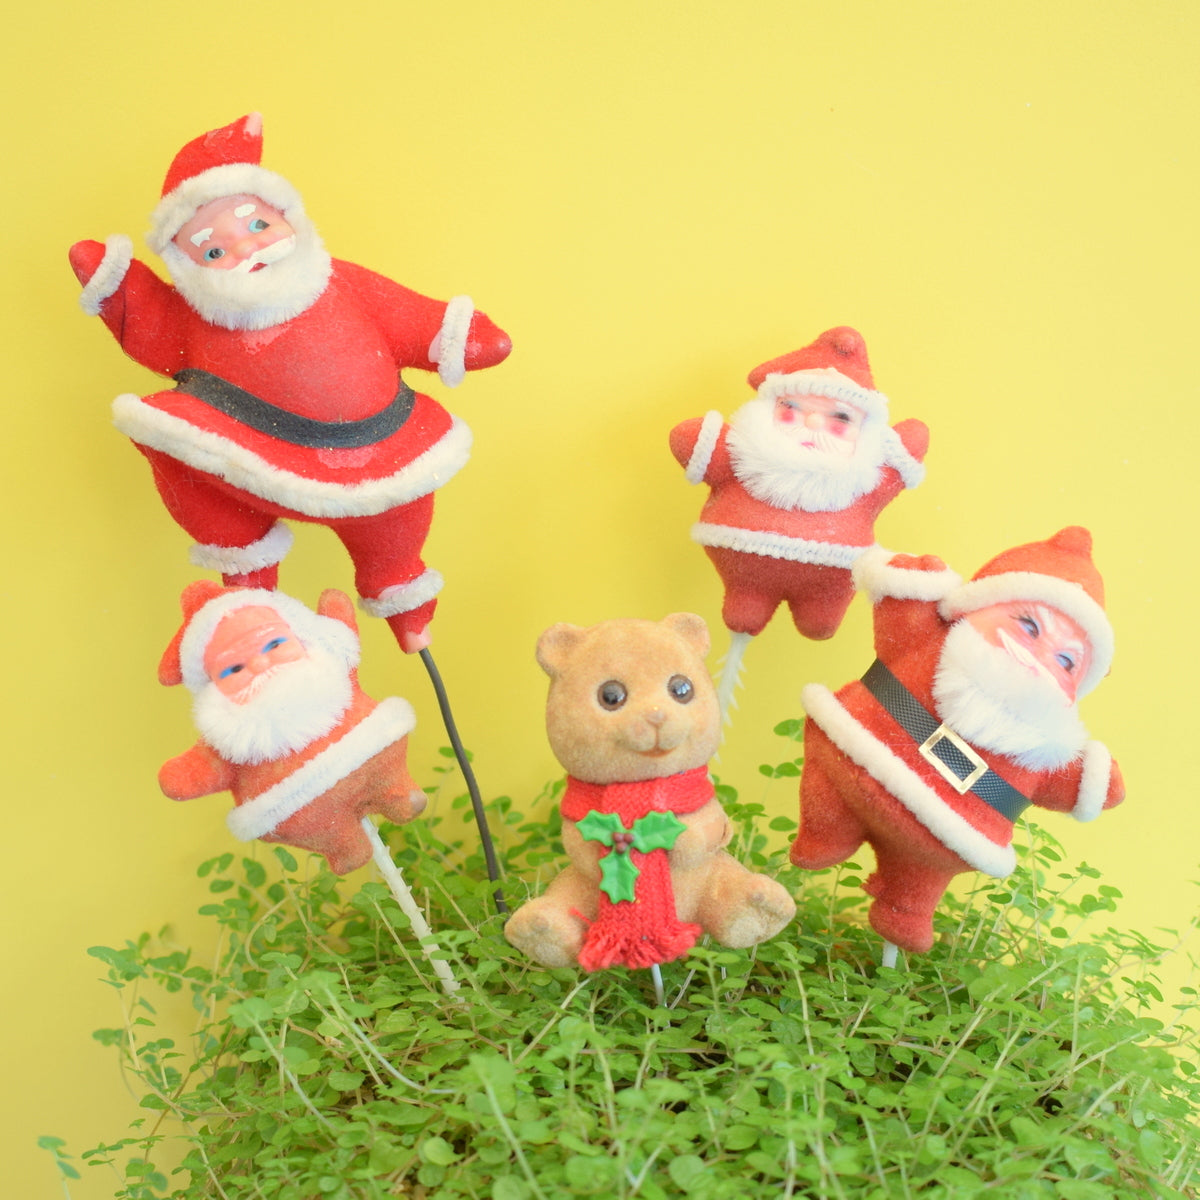 Vintage 1960s Kitsch Flocked Plastic Kitsch Christmas Decoration Group x5 - Santa on Sticks